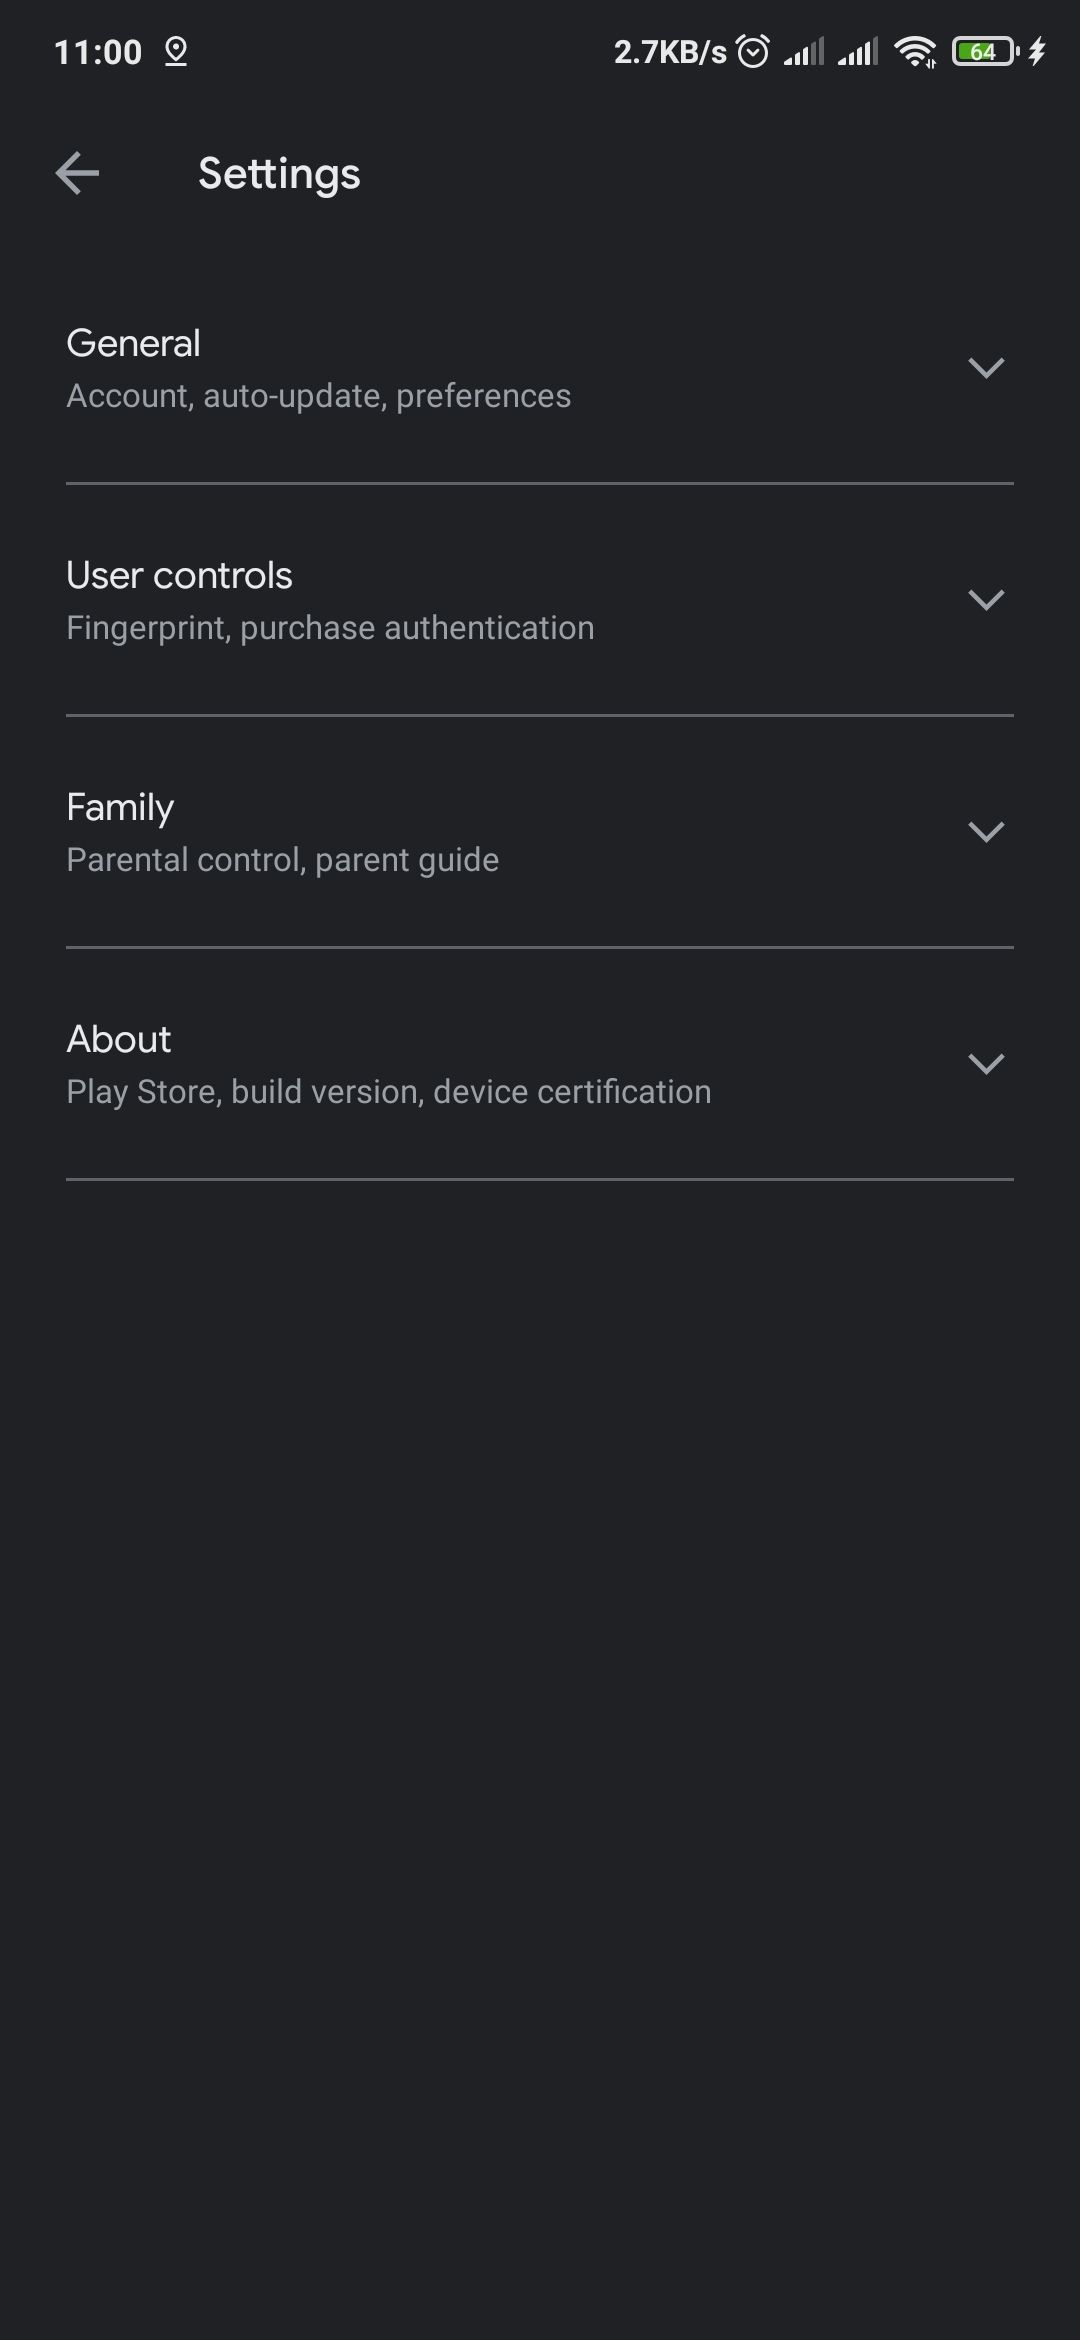 Google Play Store granular settings section